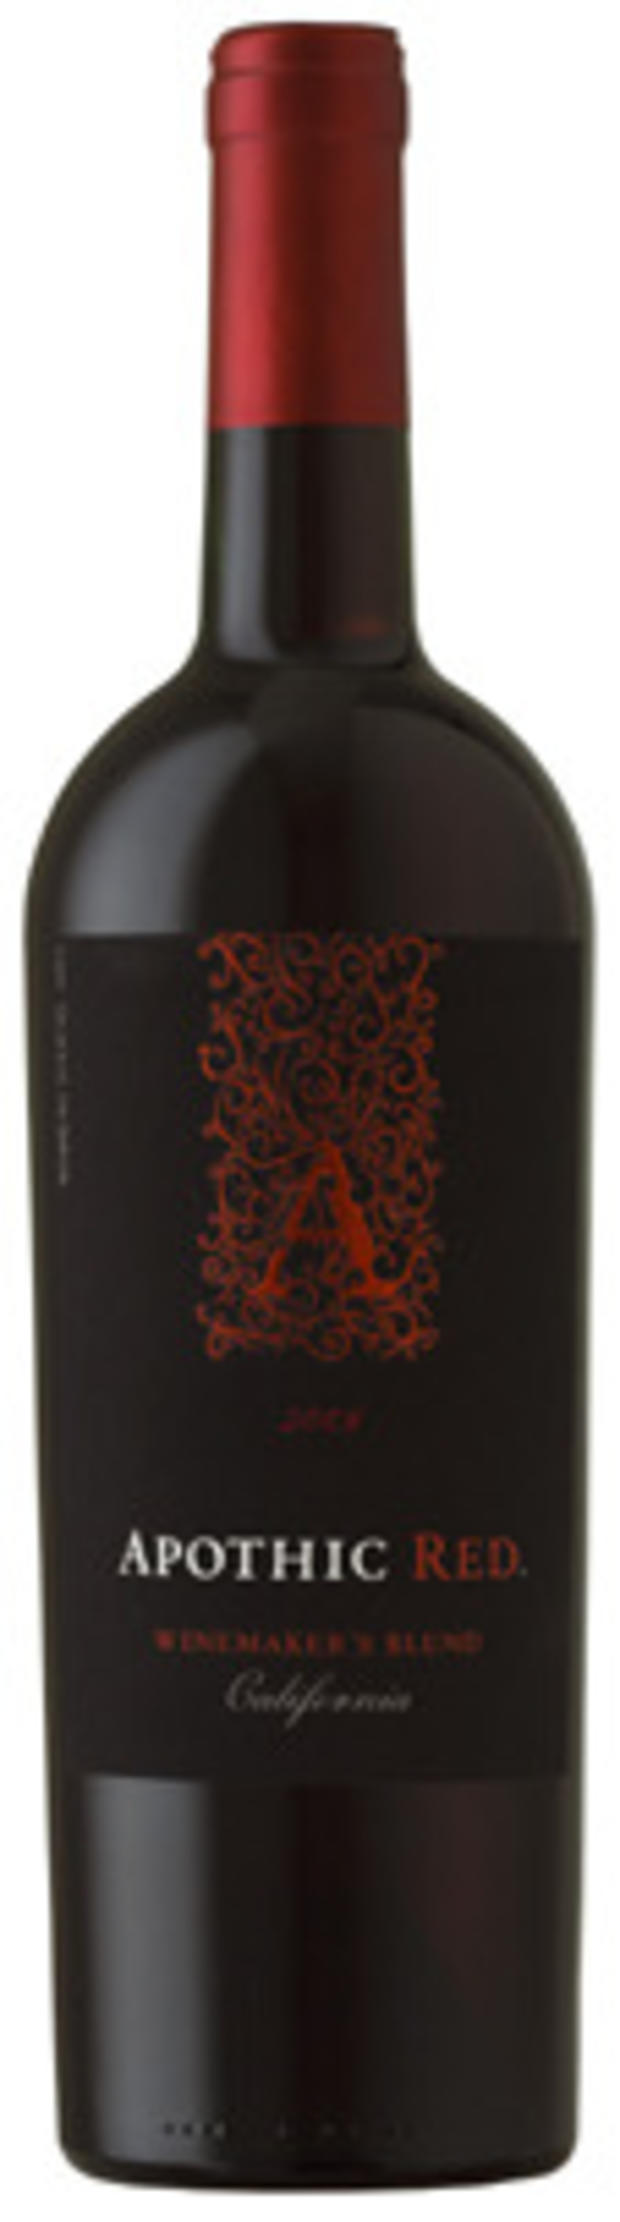 Apothic_Red_wine_bottle.jpg 